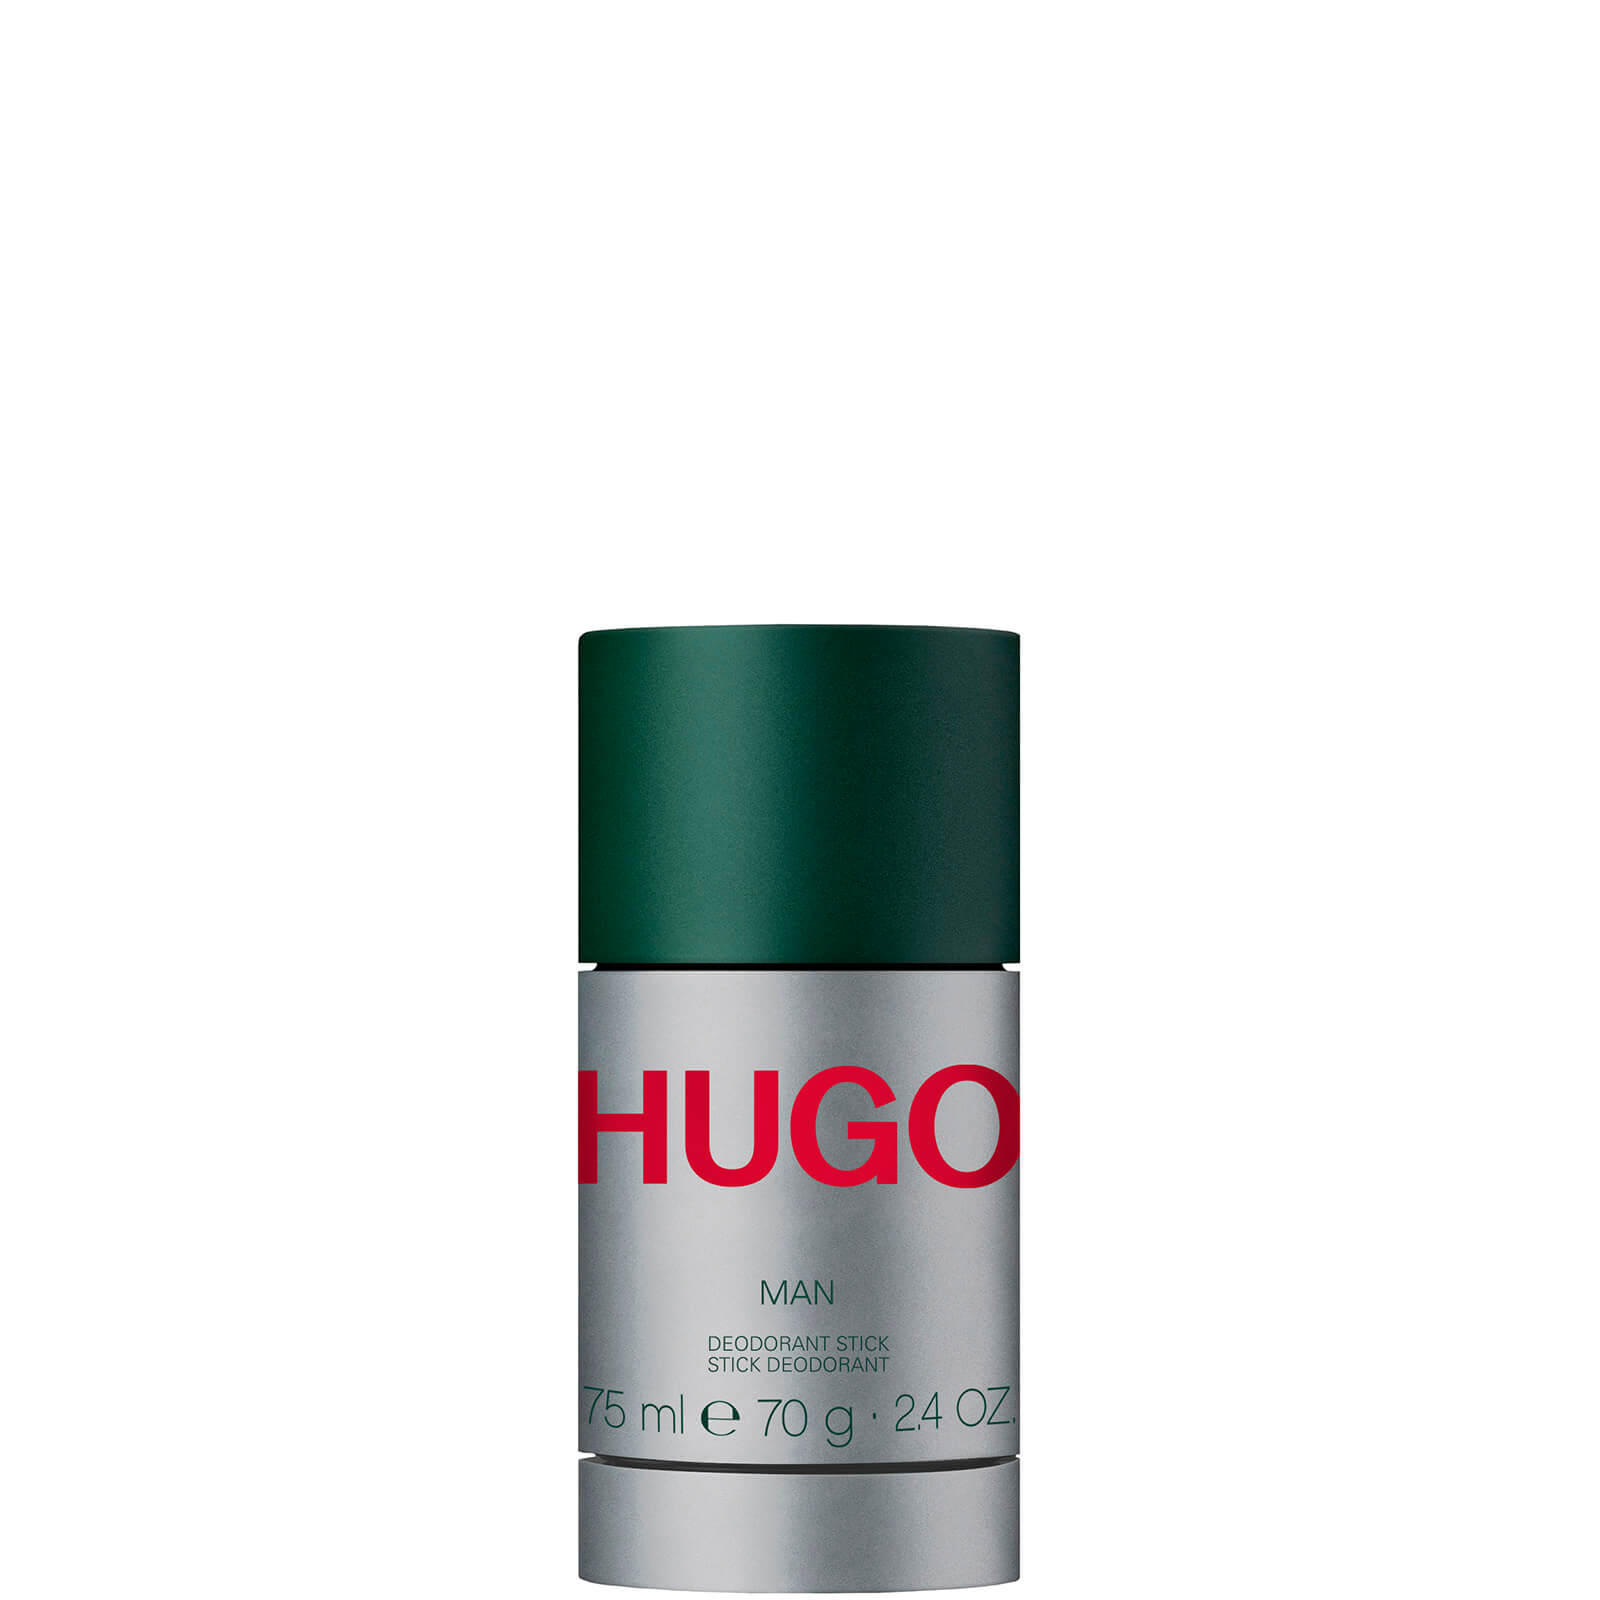 Desodorante transparente en barra HUGO MAN de Hugo Boss 75 ml